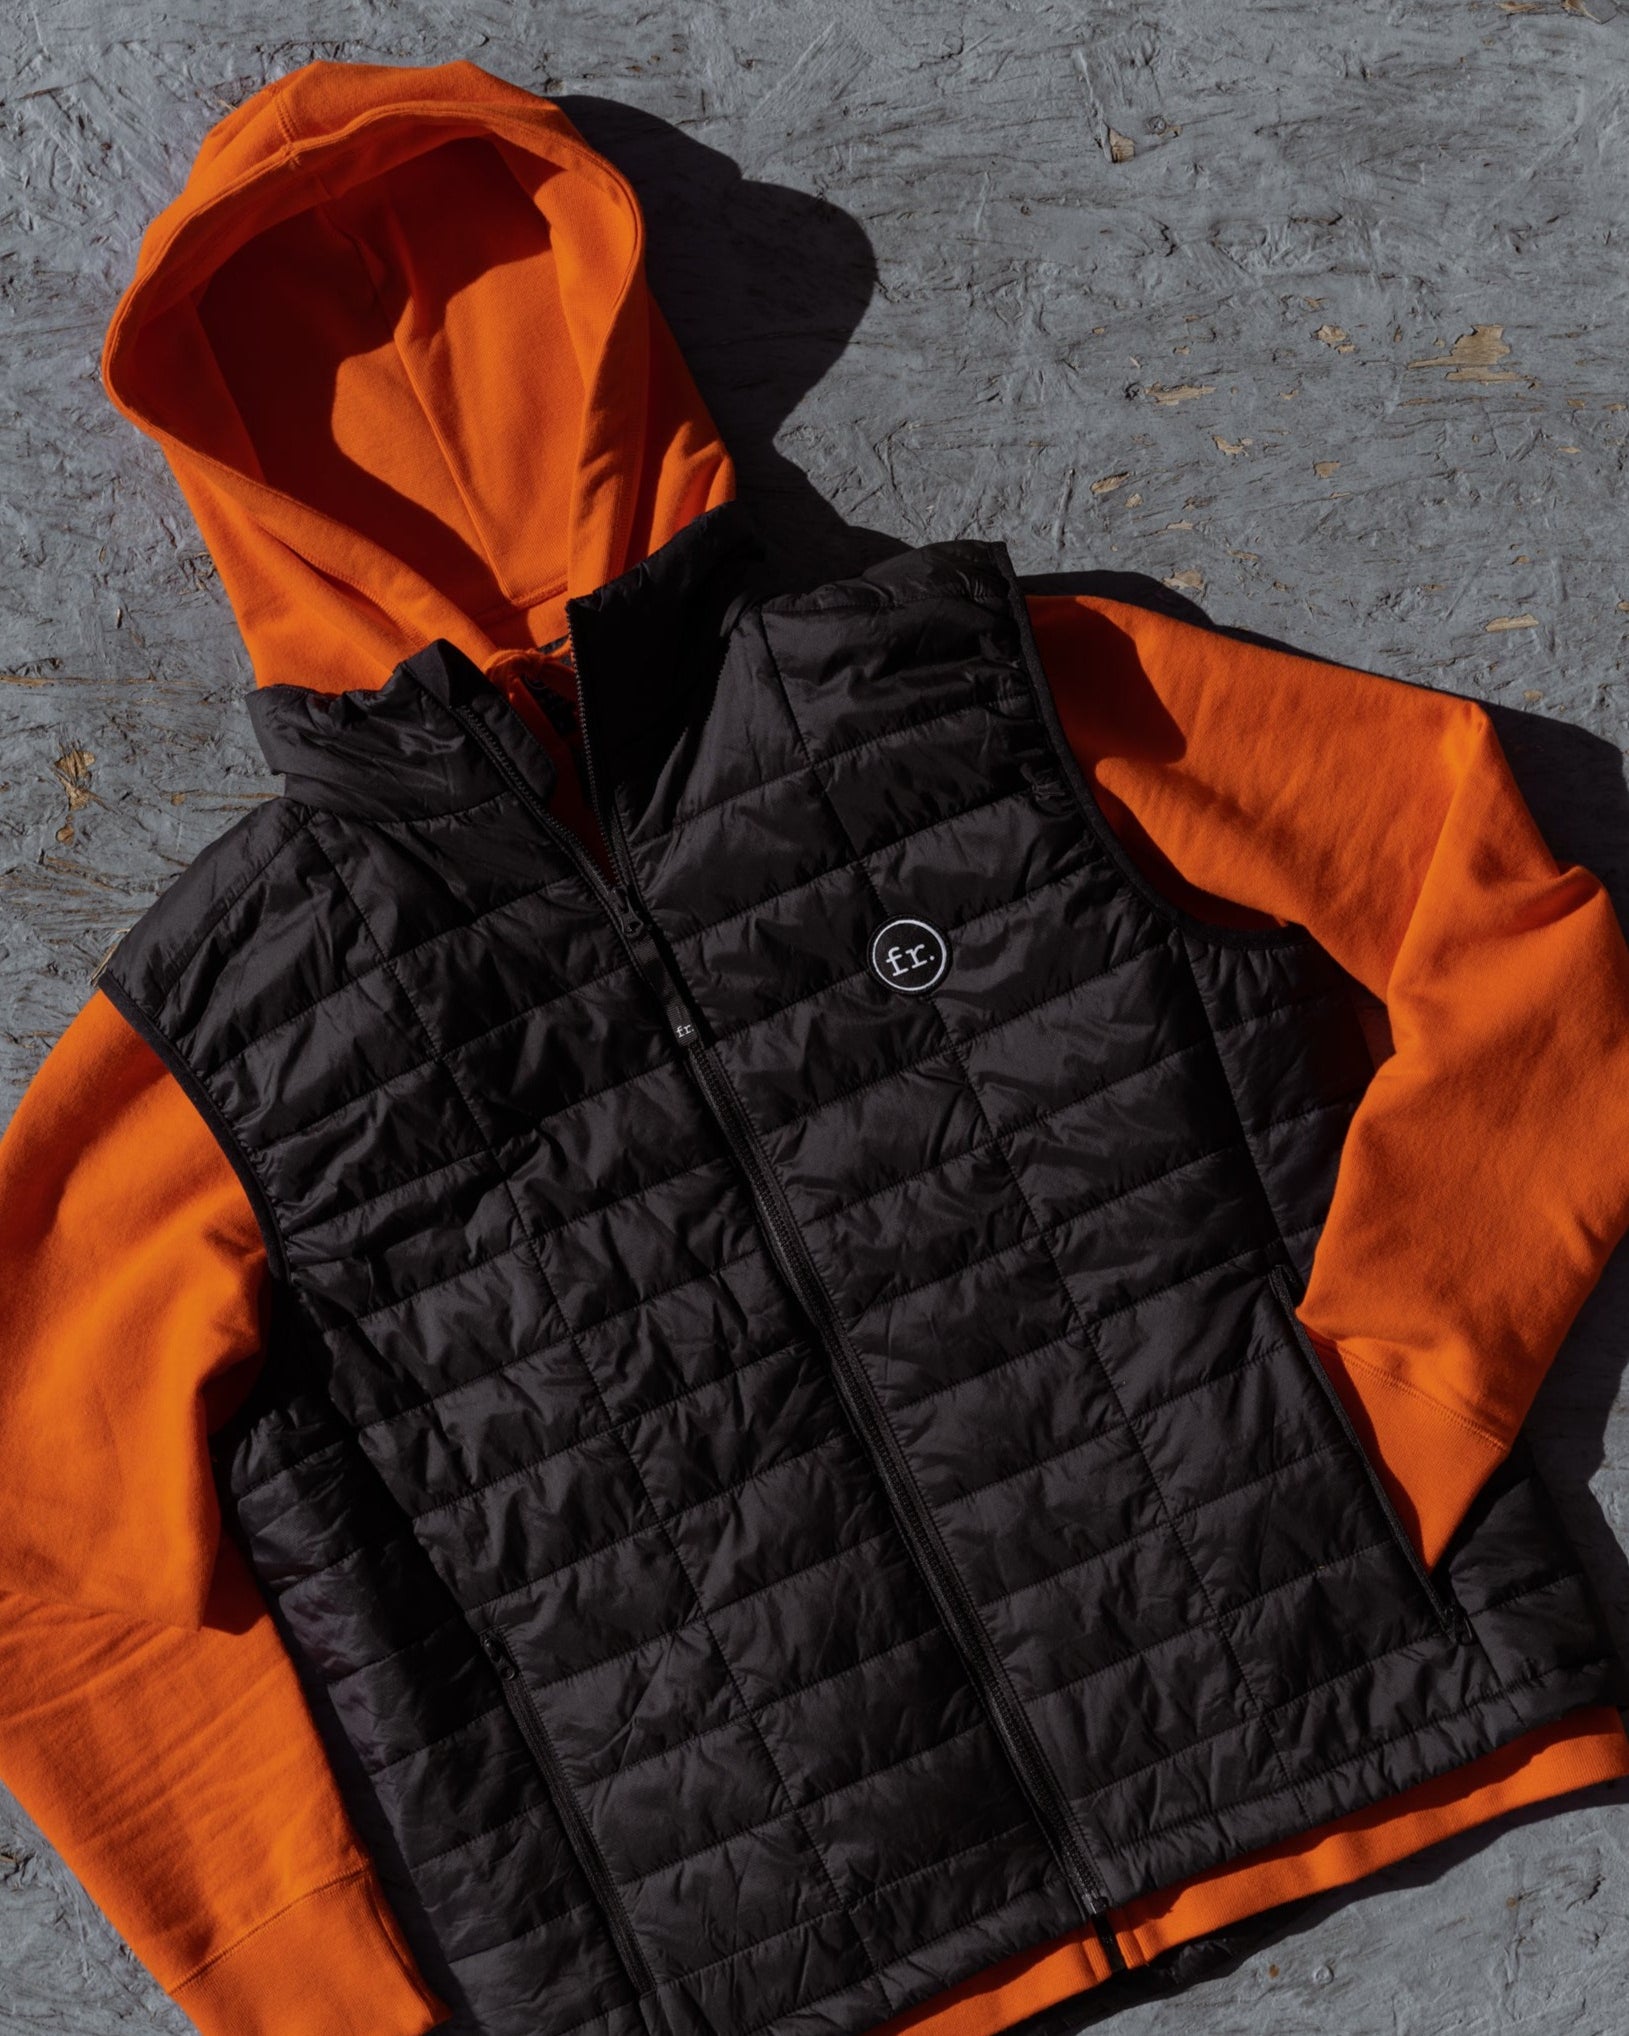 FR. Full Zip Hooded Sweatshirt Orange - Foreign Rider Co.